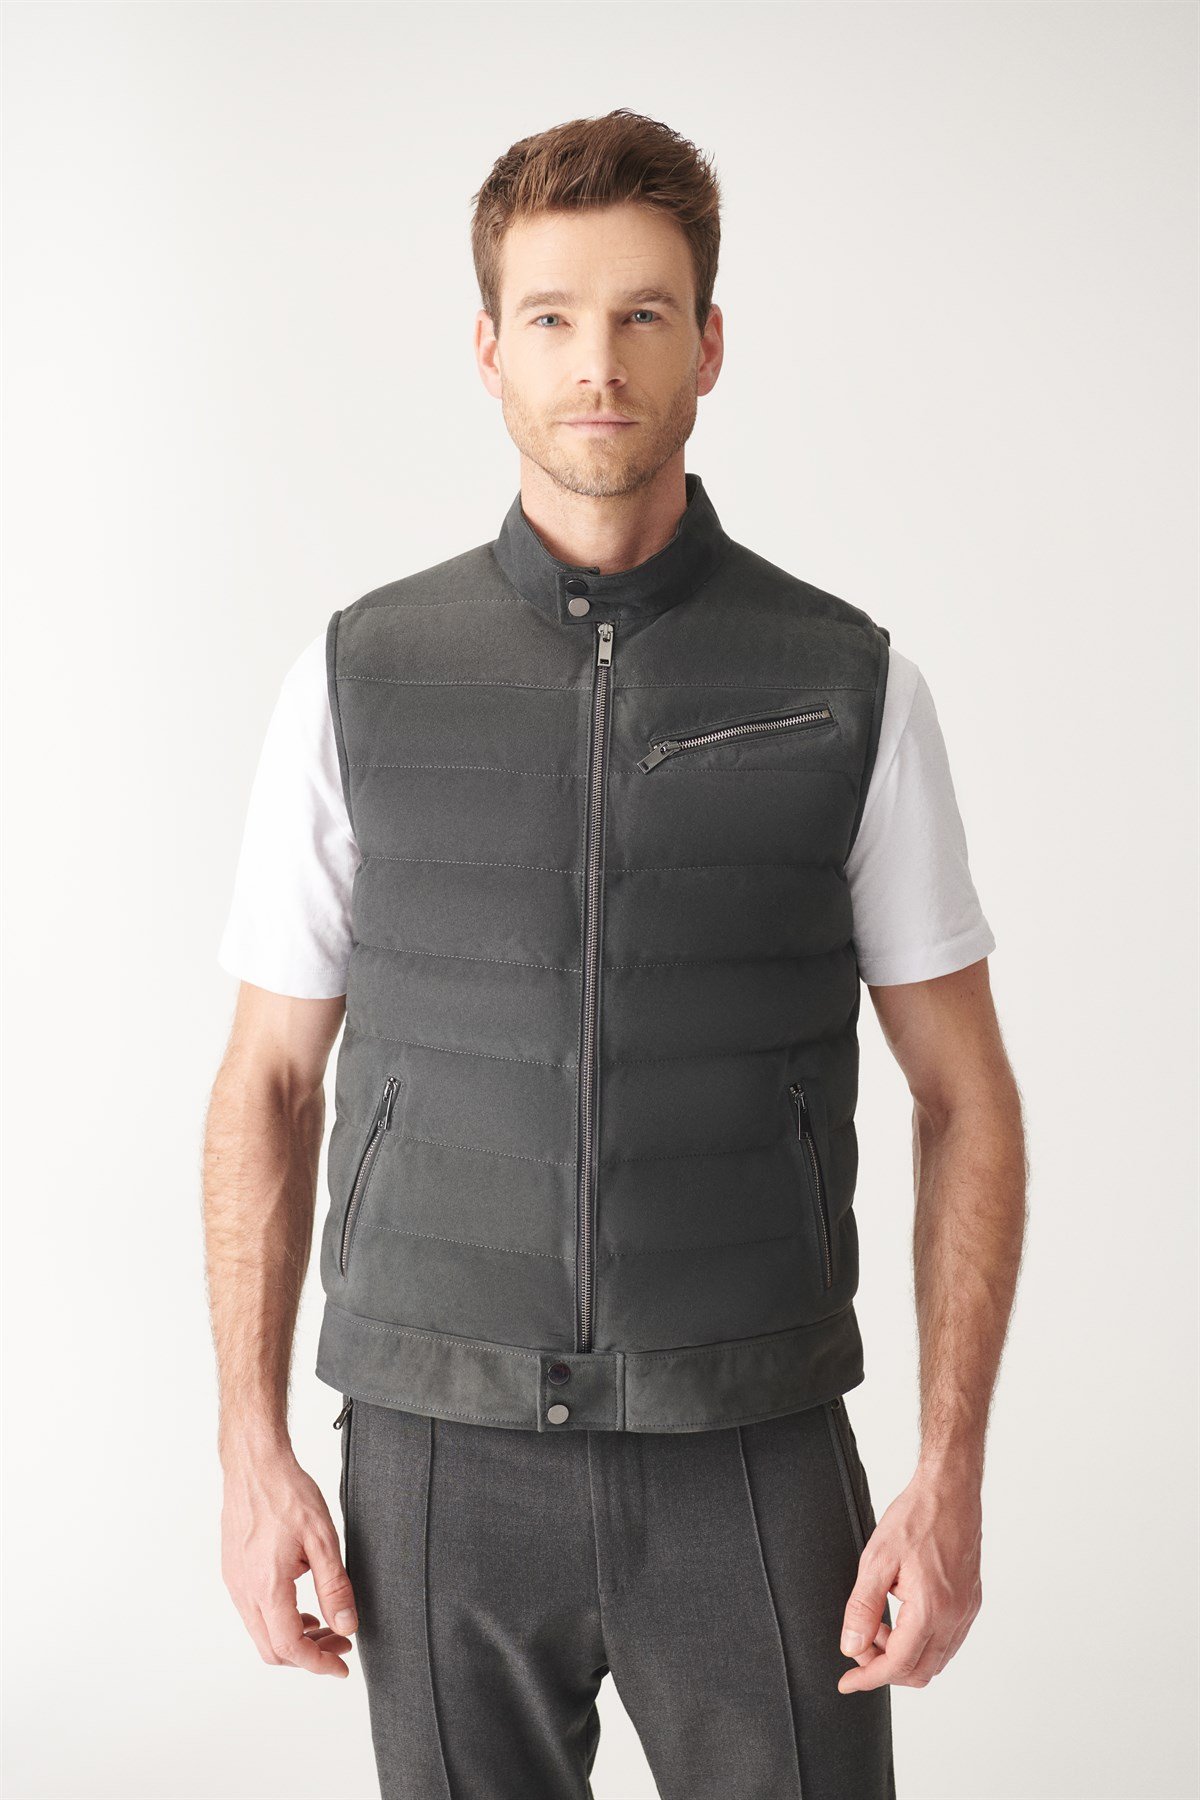 OTIS Anthracite Sports Suede Vest | Men's Suede Leather Jacket